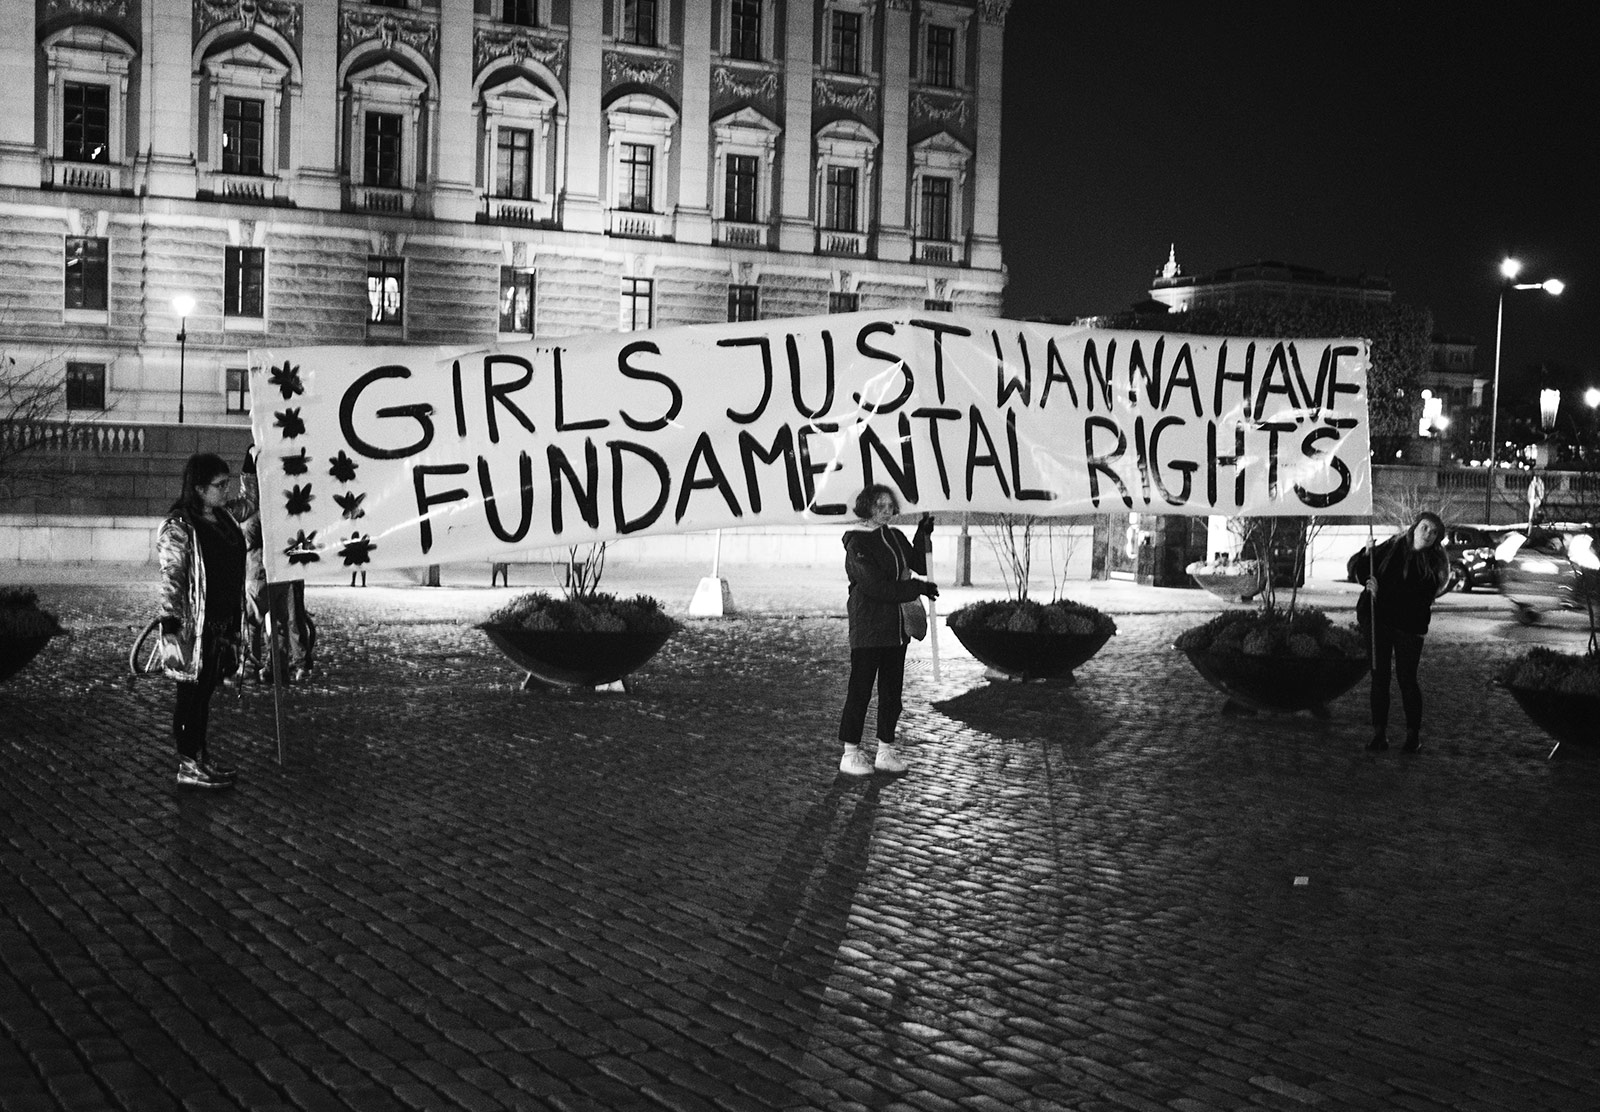 "Girls just wanna have fundamental rights" banner